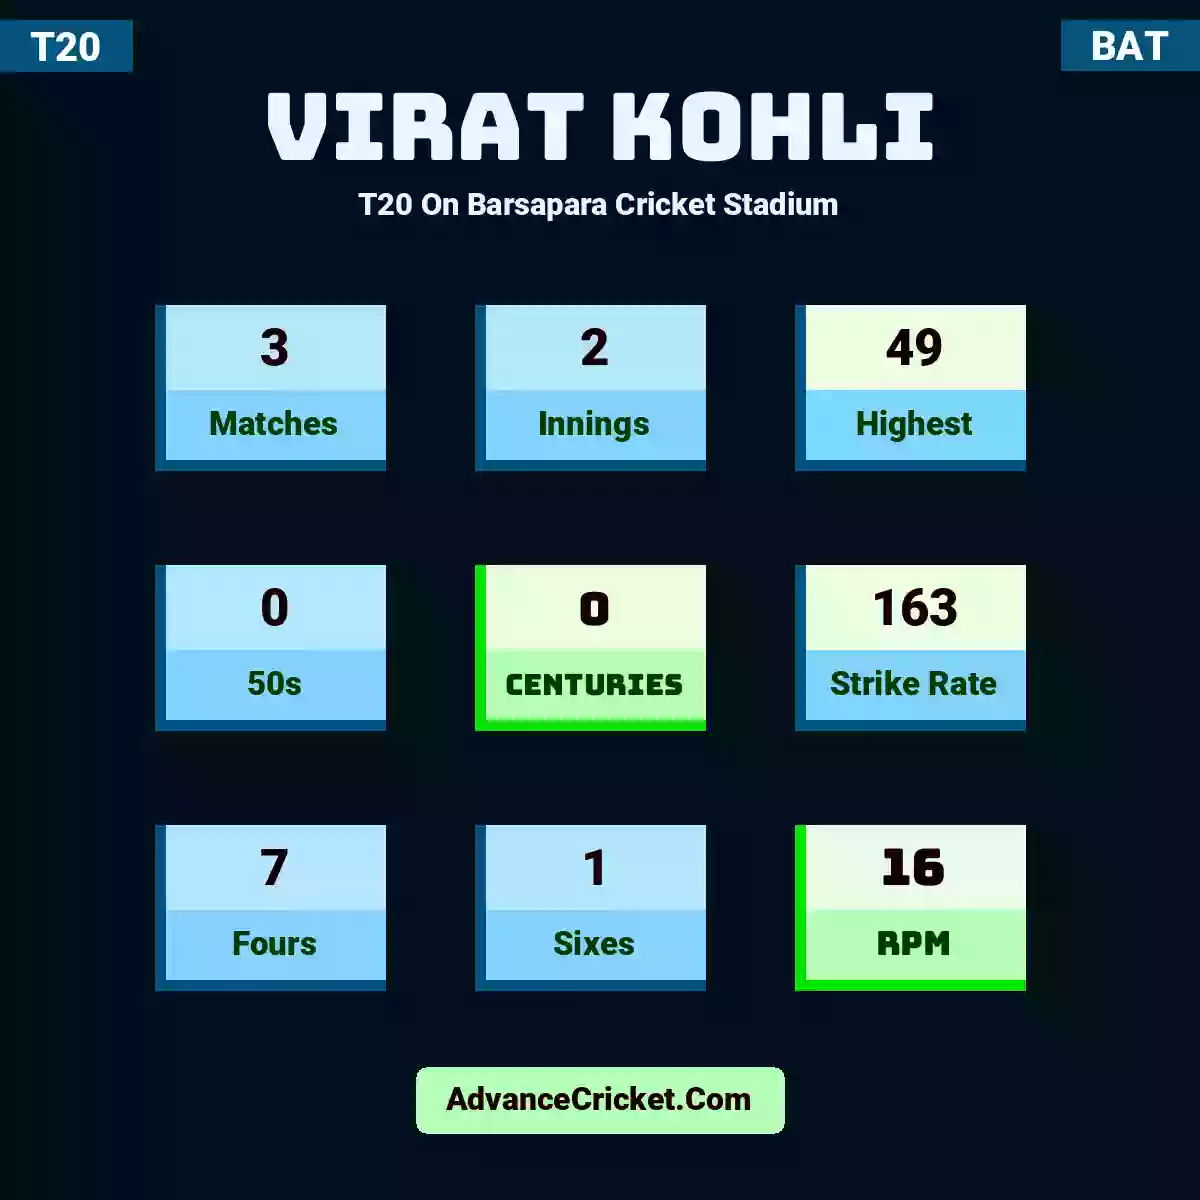 Virat Kohli T20  On Barsapara Cricket Stadium, Virat Kohli played 3 matches, scored 49 runs as highest, 0 half-centuries, and 0 centuries, with a strike rate of 163. V.Kohli hit 7 fours and 1 sixes, with an RPM of 16.